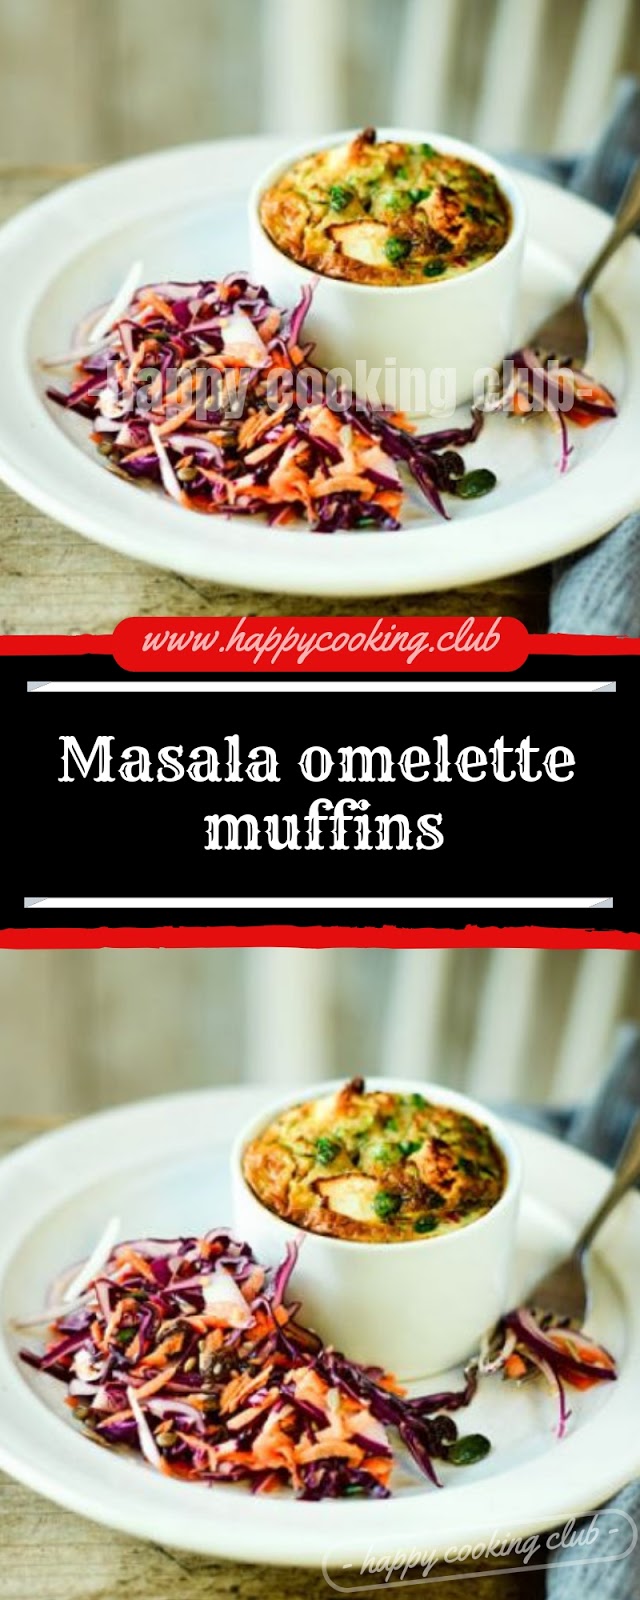 Masala omelette muffins